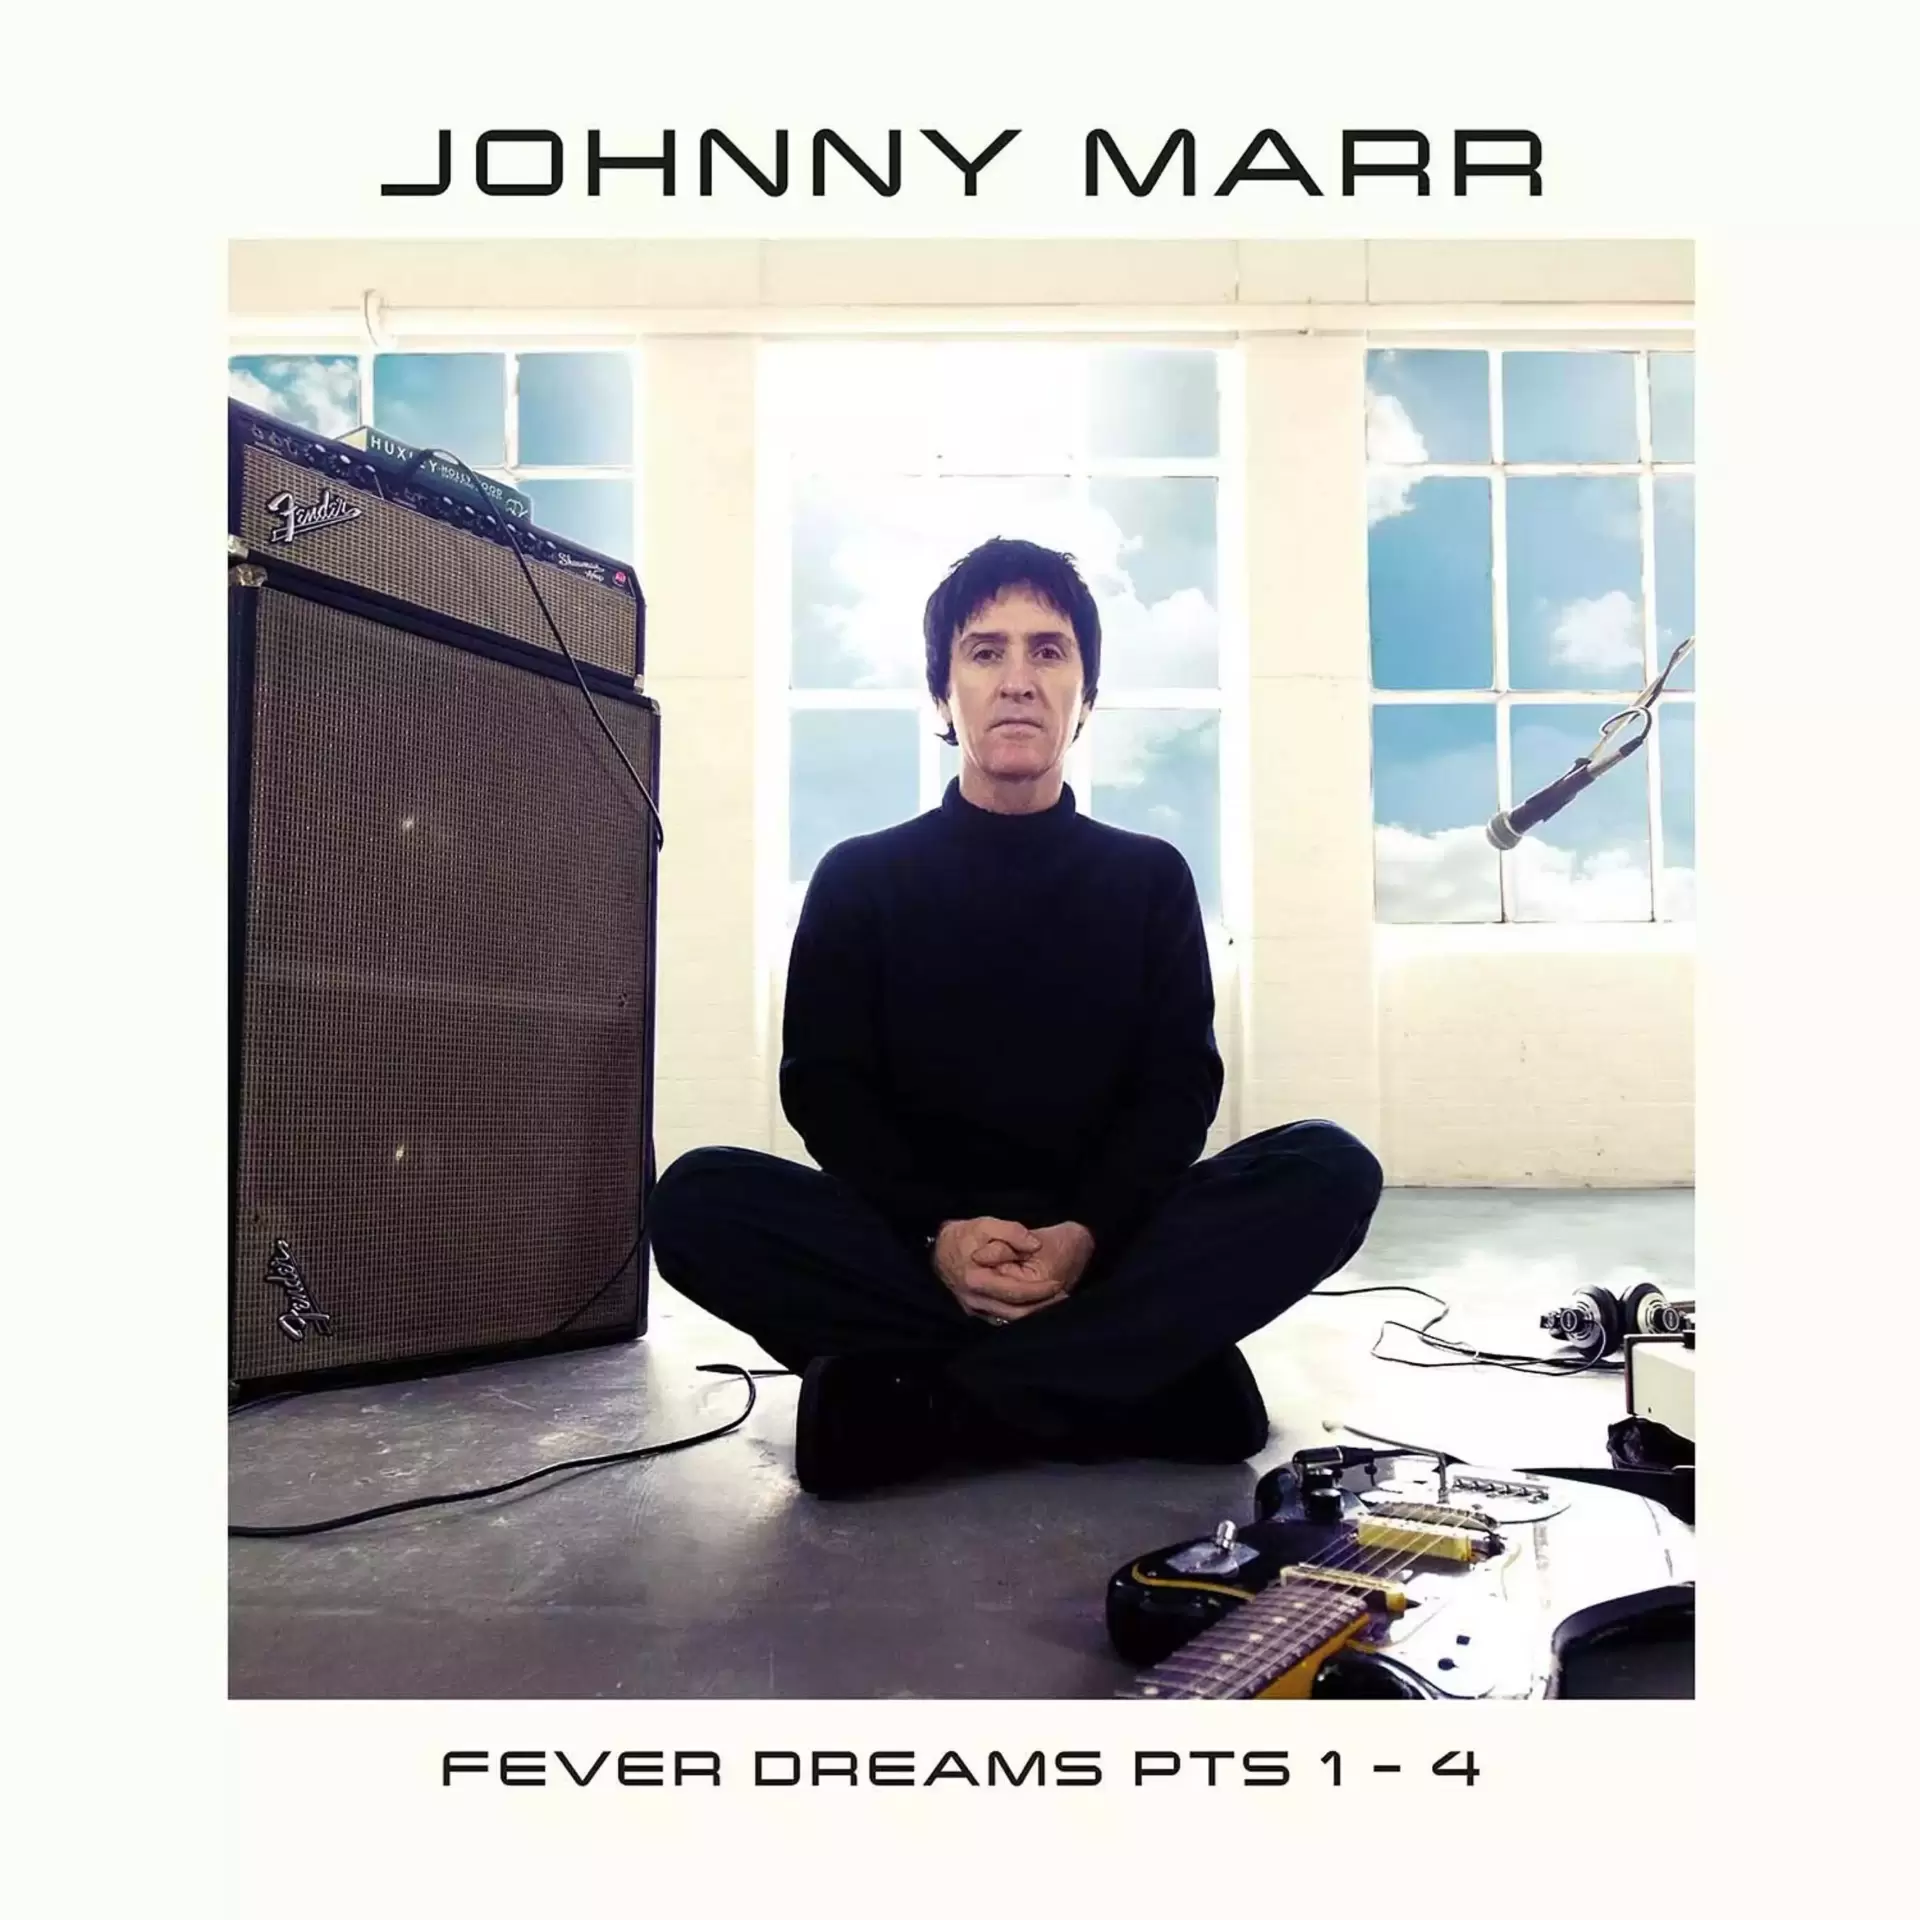 Johnny Marr – Fever Dreams Pts 1-4 (BMG) 2